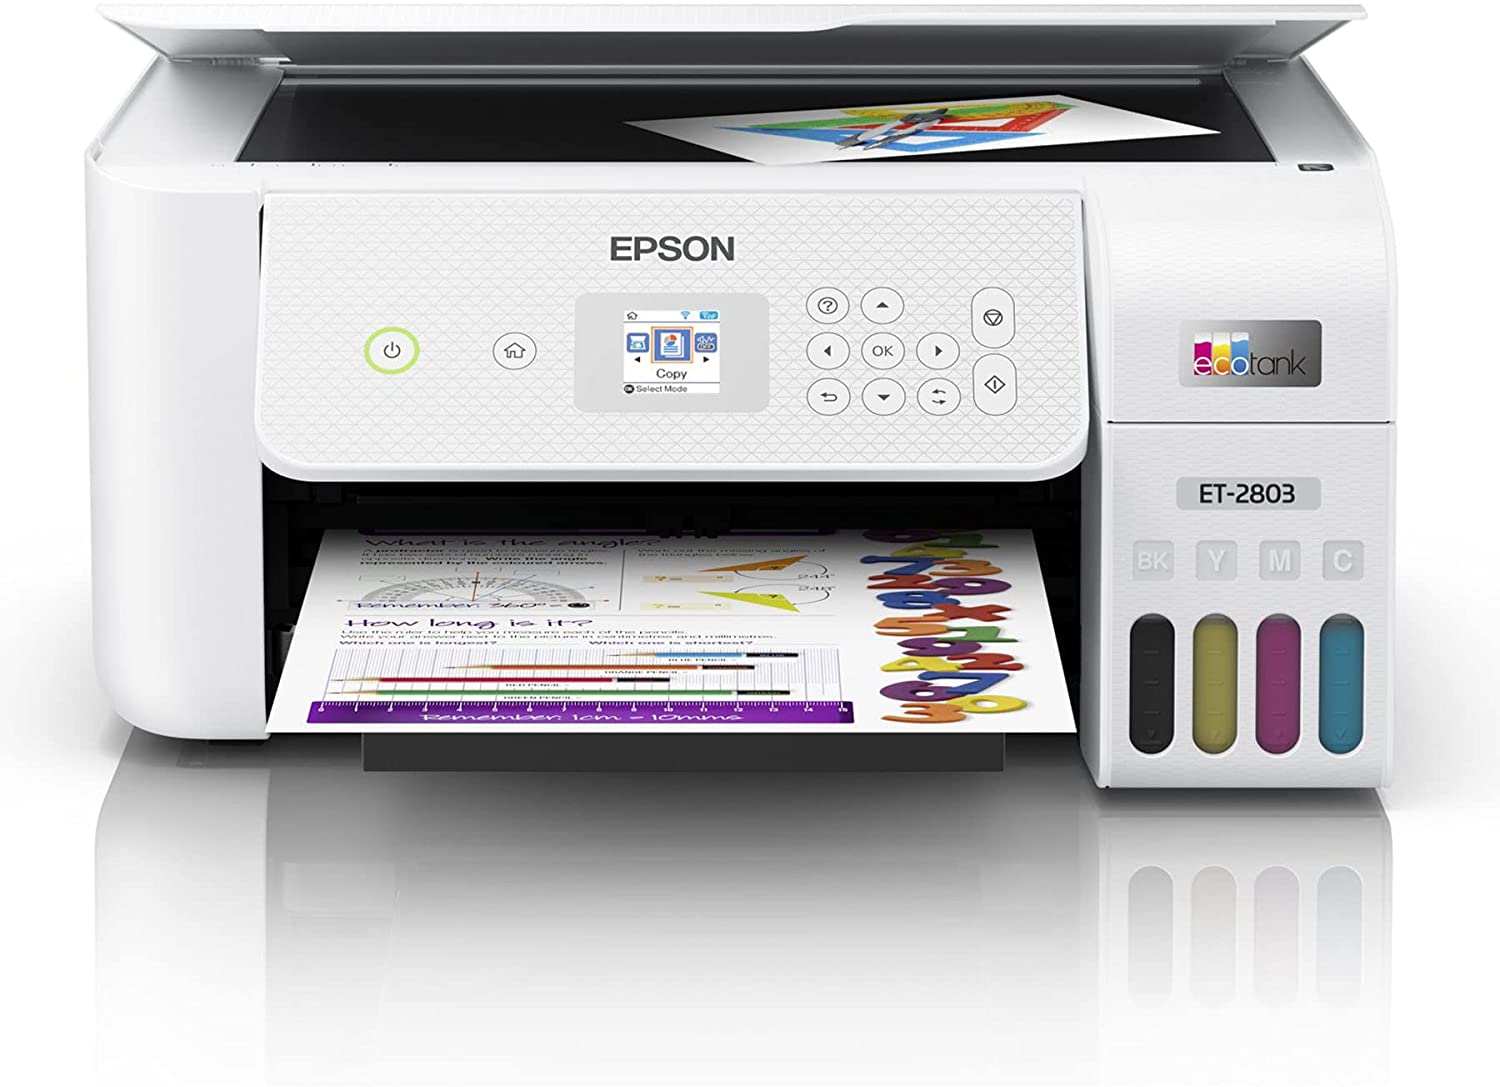 Epson EcoTank 2803 Series Impresora Supertank de inyección de tinta